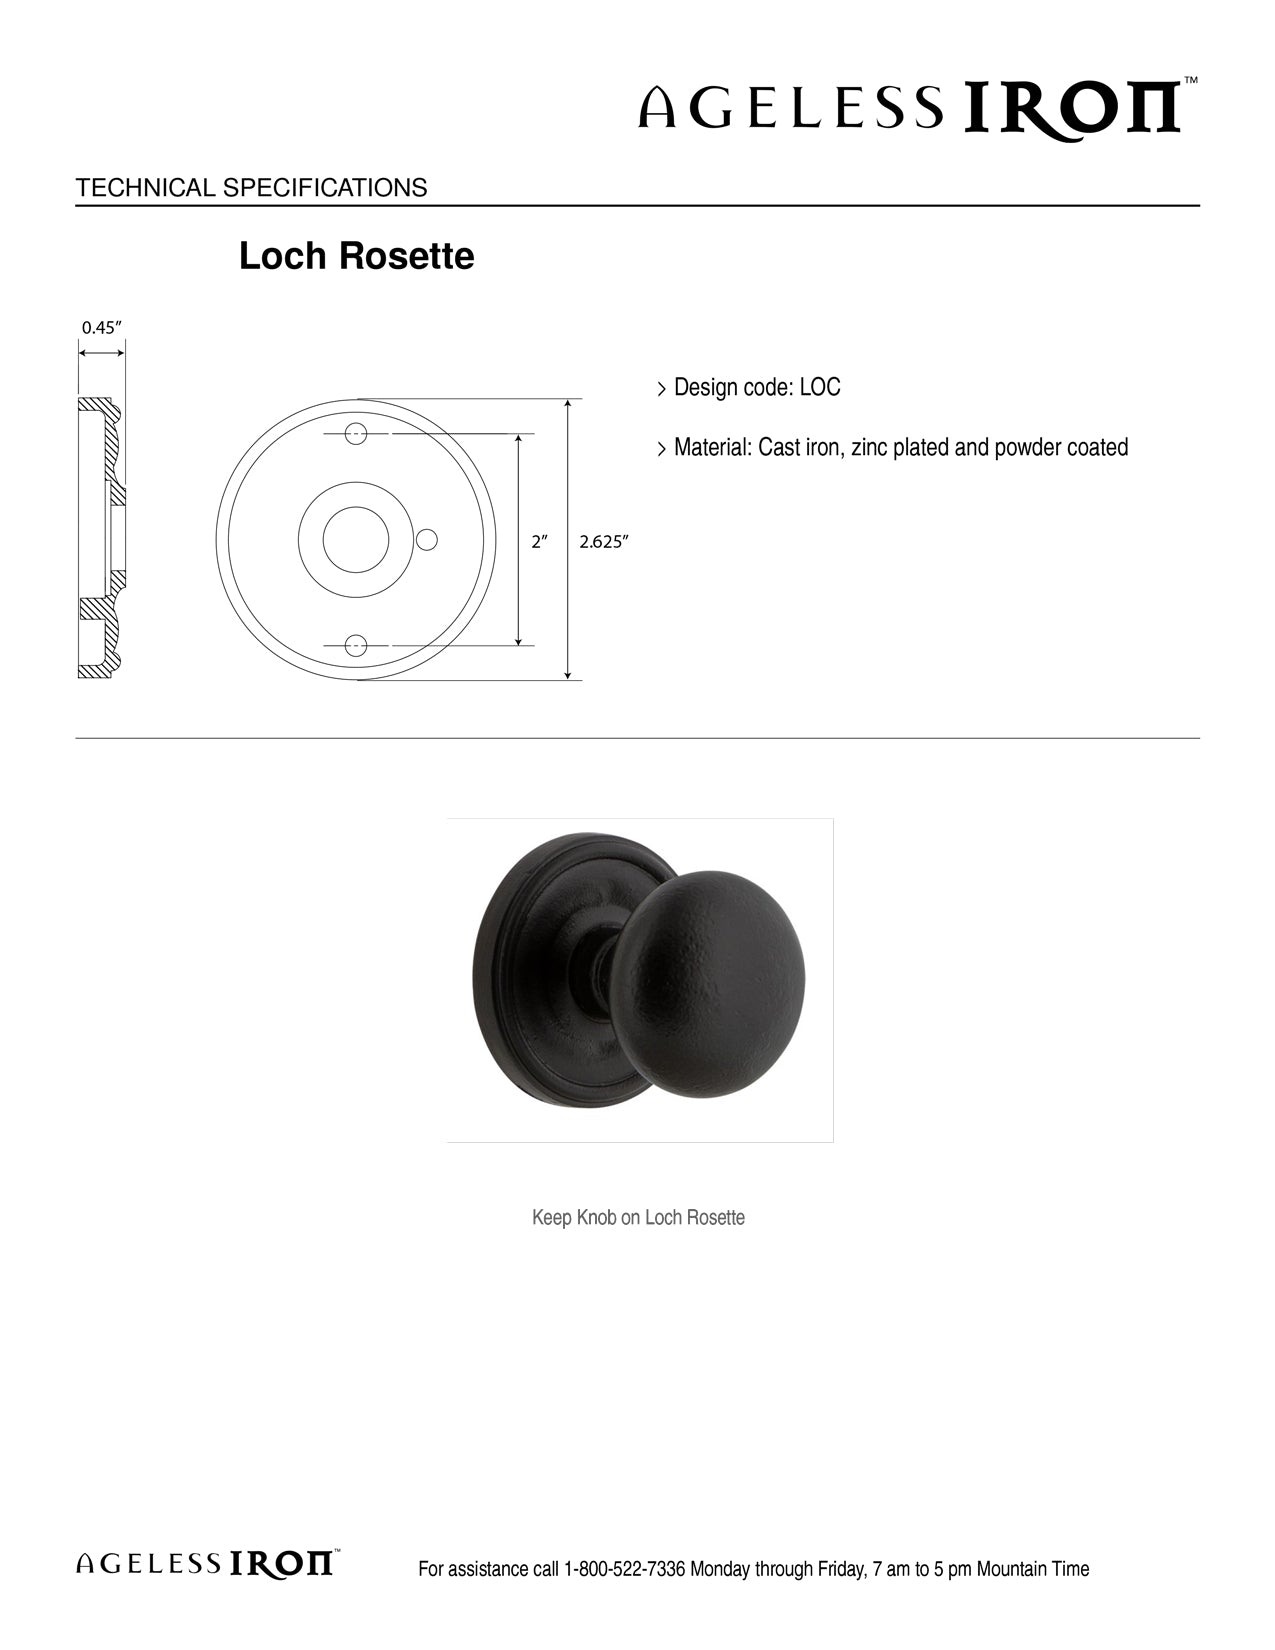 Loch Rosette Technical Specs